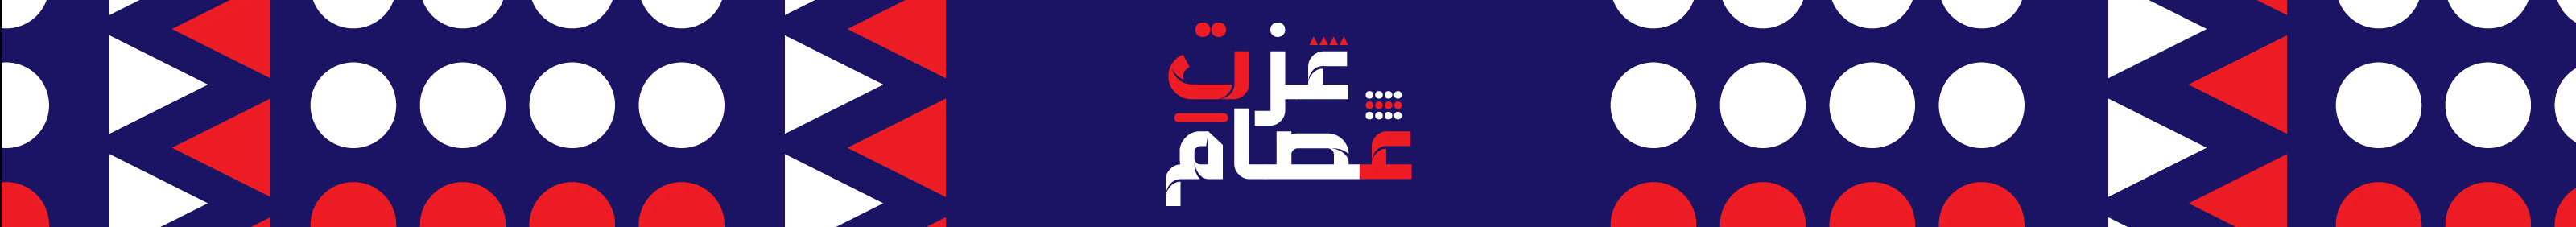 Ezzat Essam Ezzat's profile banner